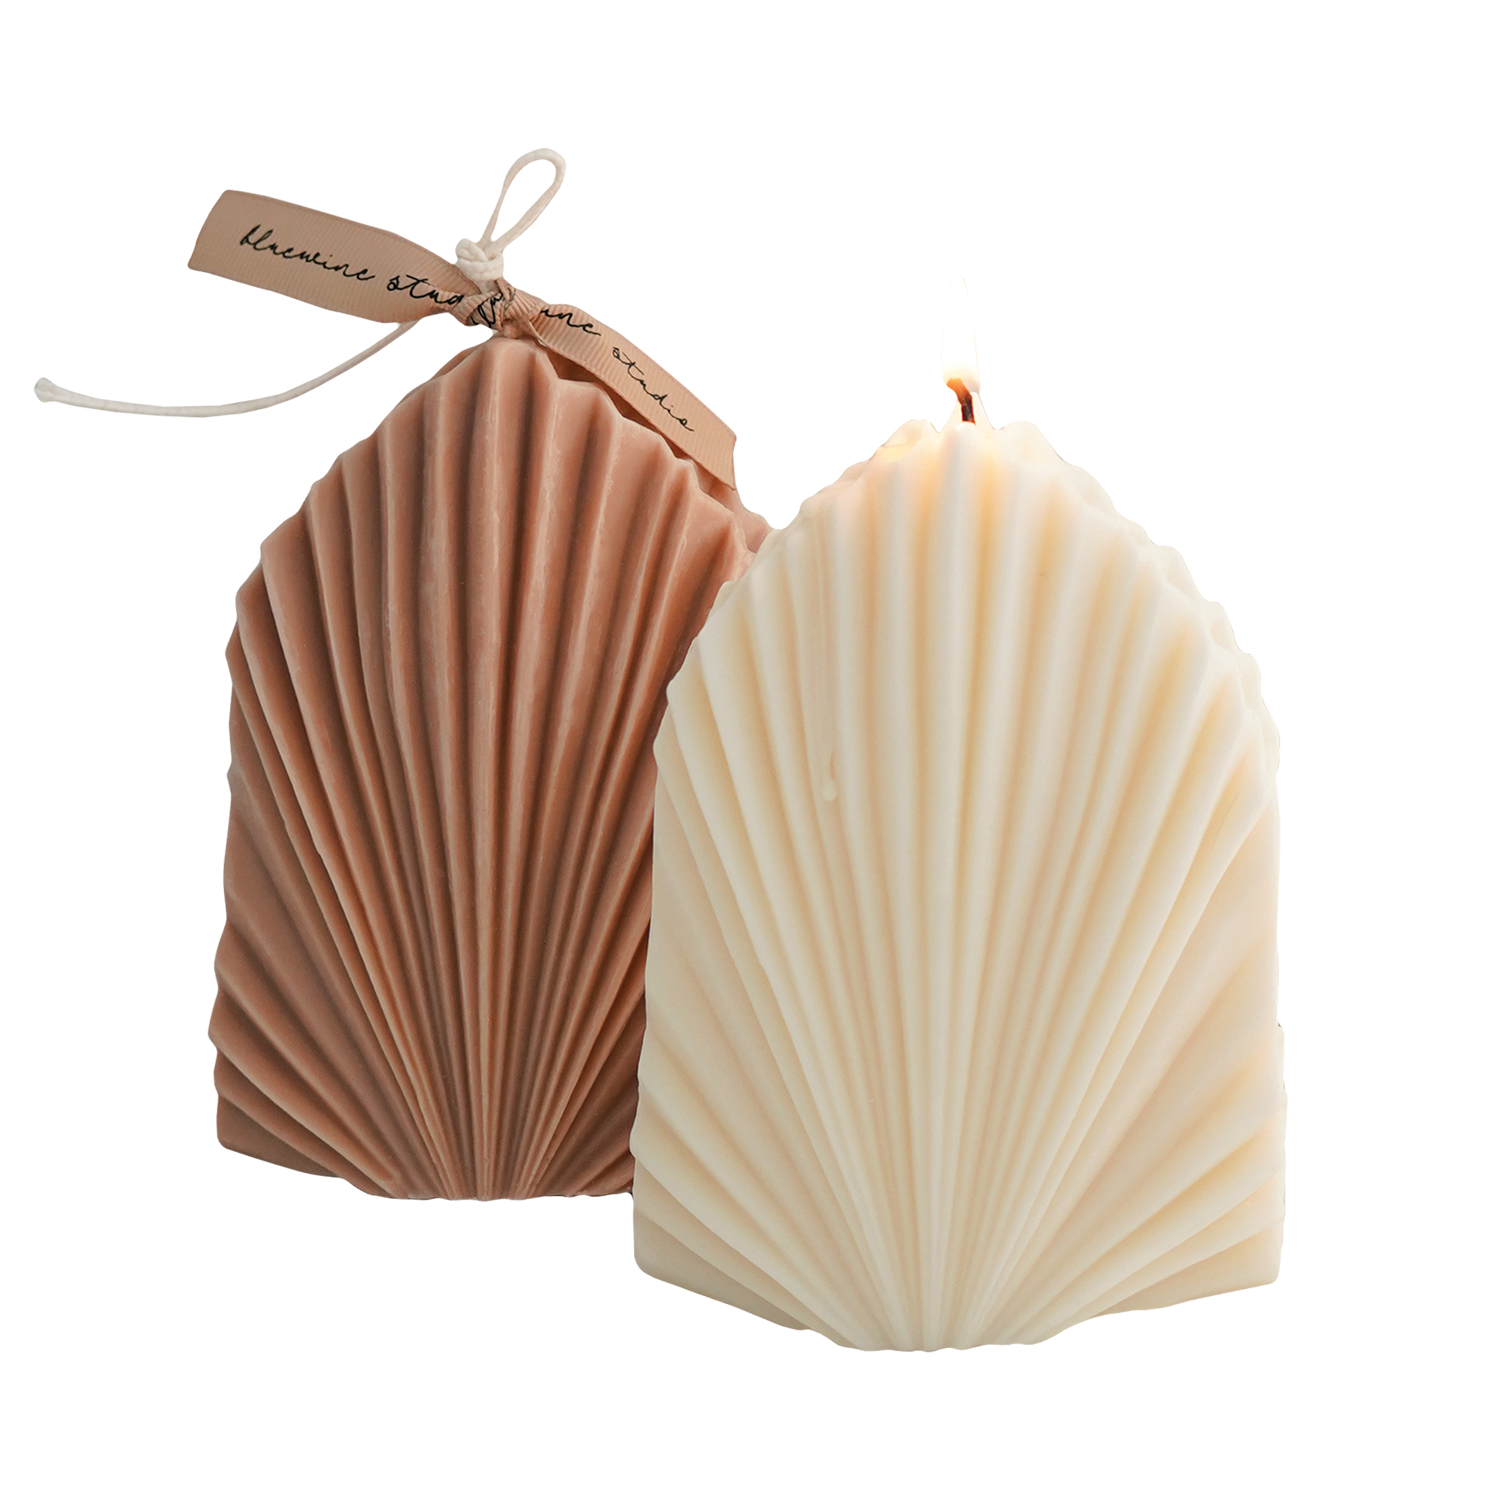 a lit white leaf shape soy pillar candle and beige leaf objet candle